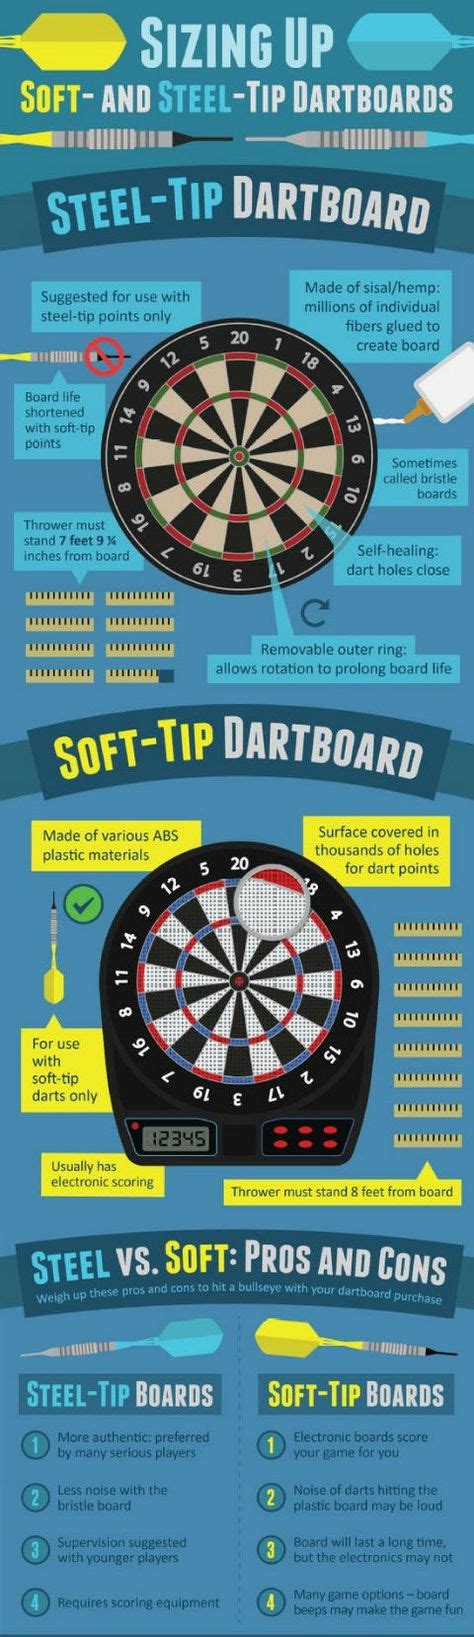 darts rules information ideas darts darts rules dart board